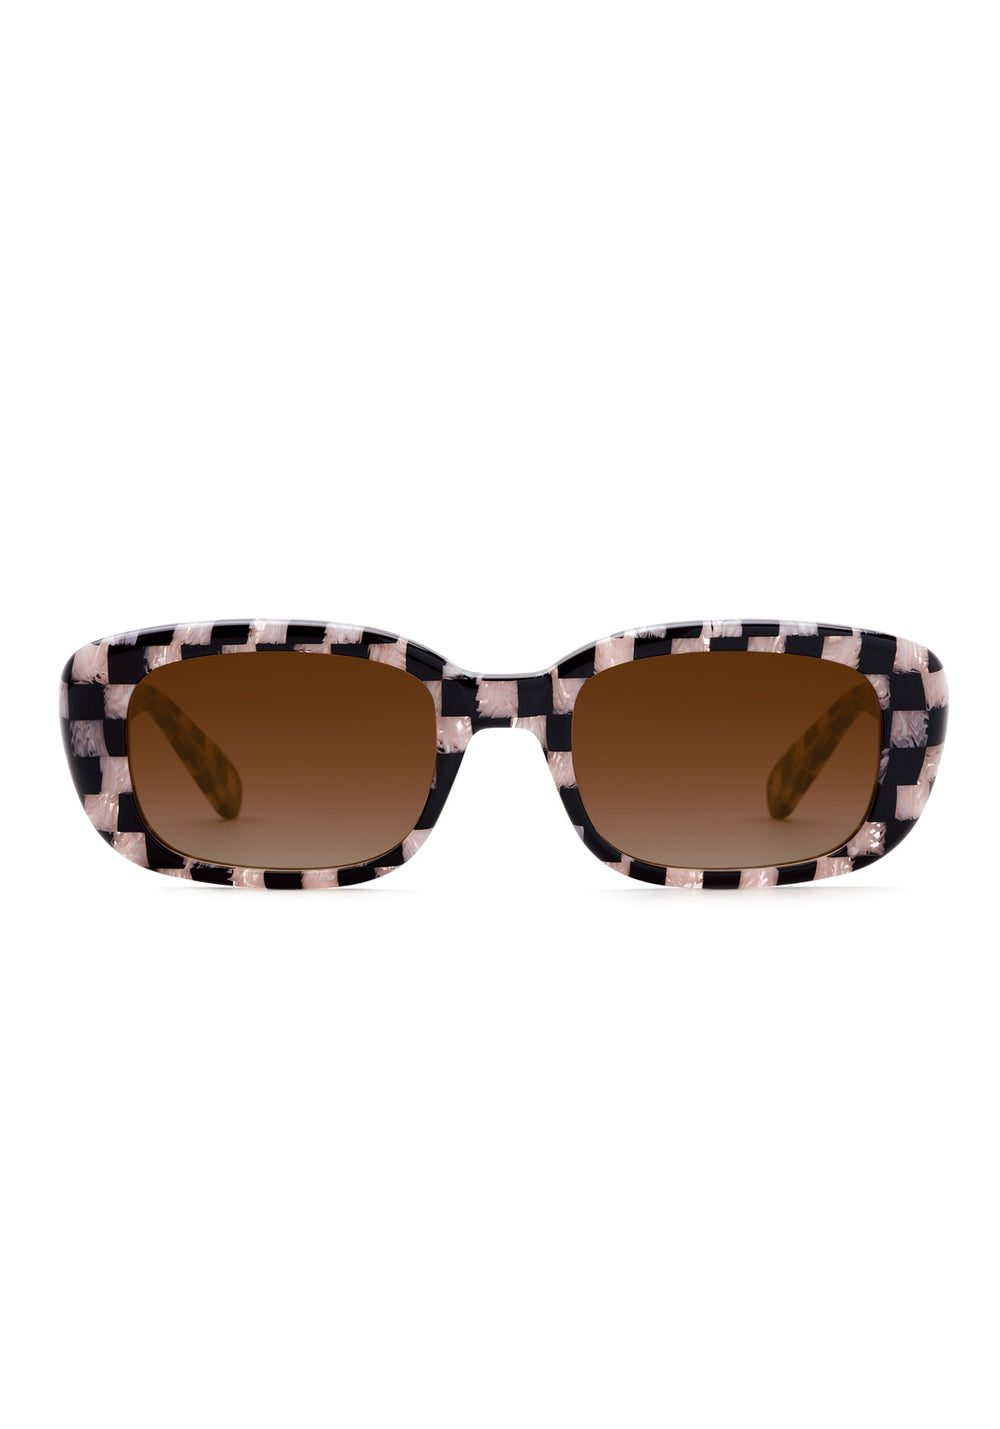 KREWE SUNGLASSES - MILAN | Harlequin + Harlequin over Petal handcrafted, pink and black checkered rectangular sunglasses